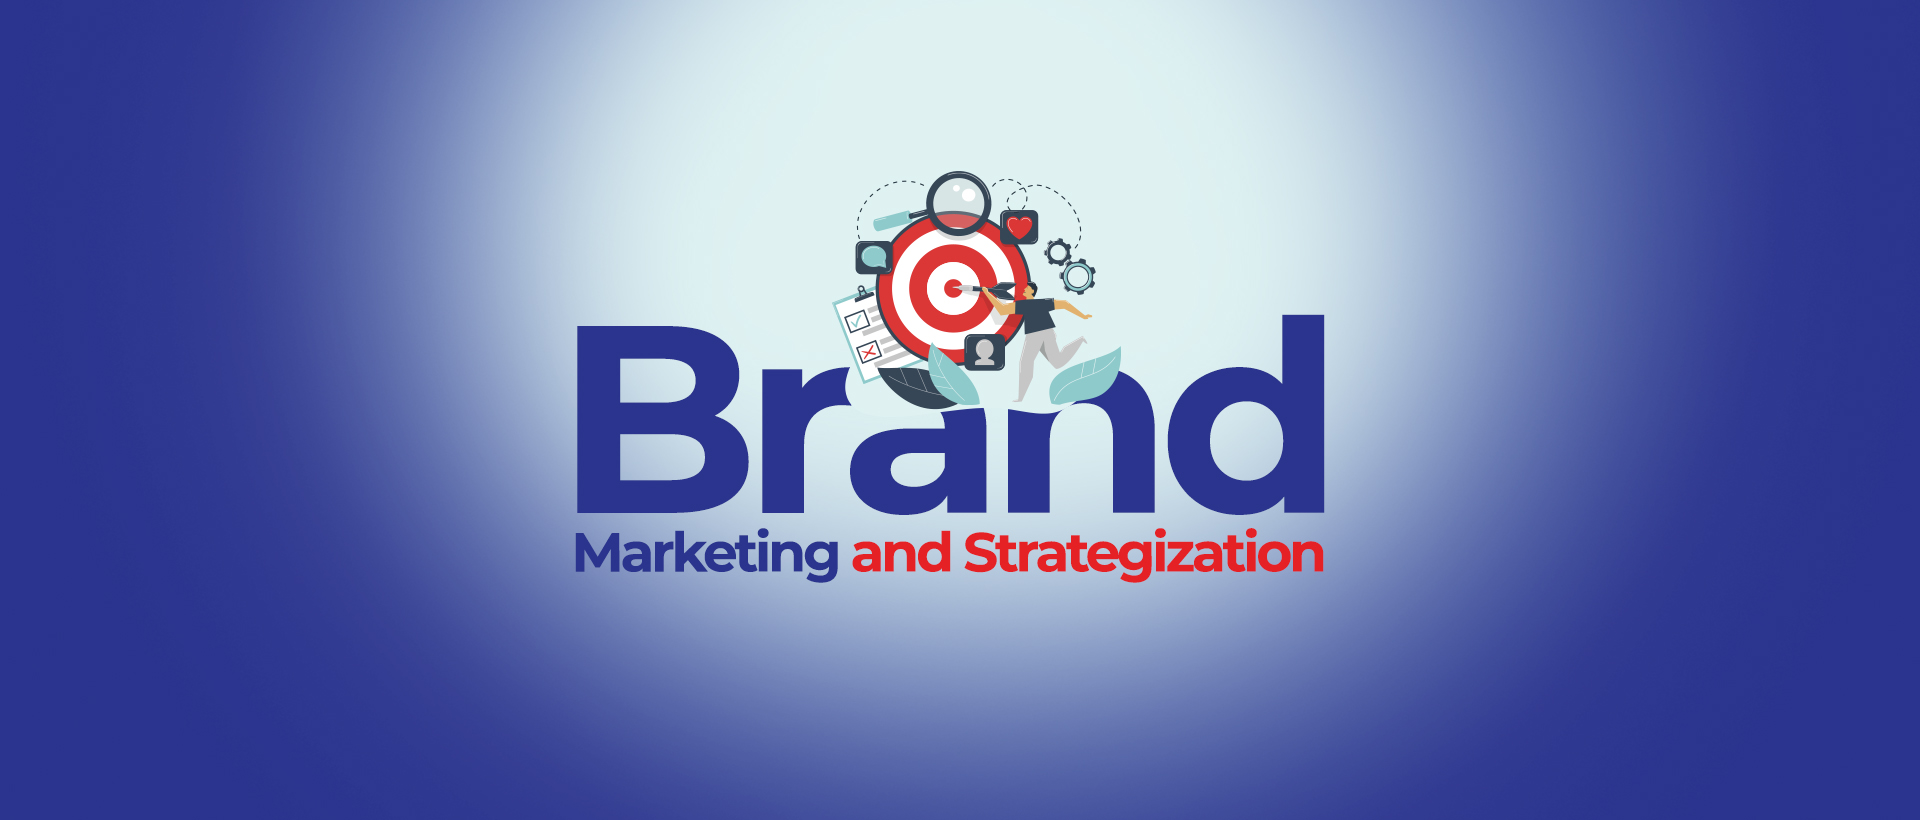 Brand Marketing and Strategization